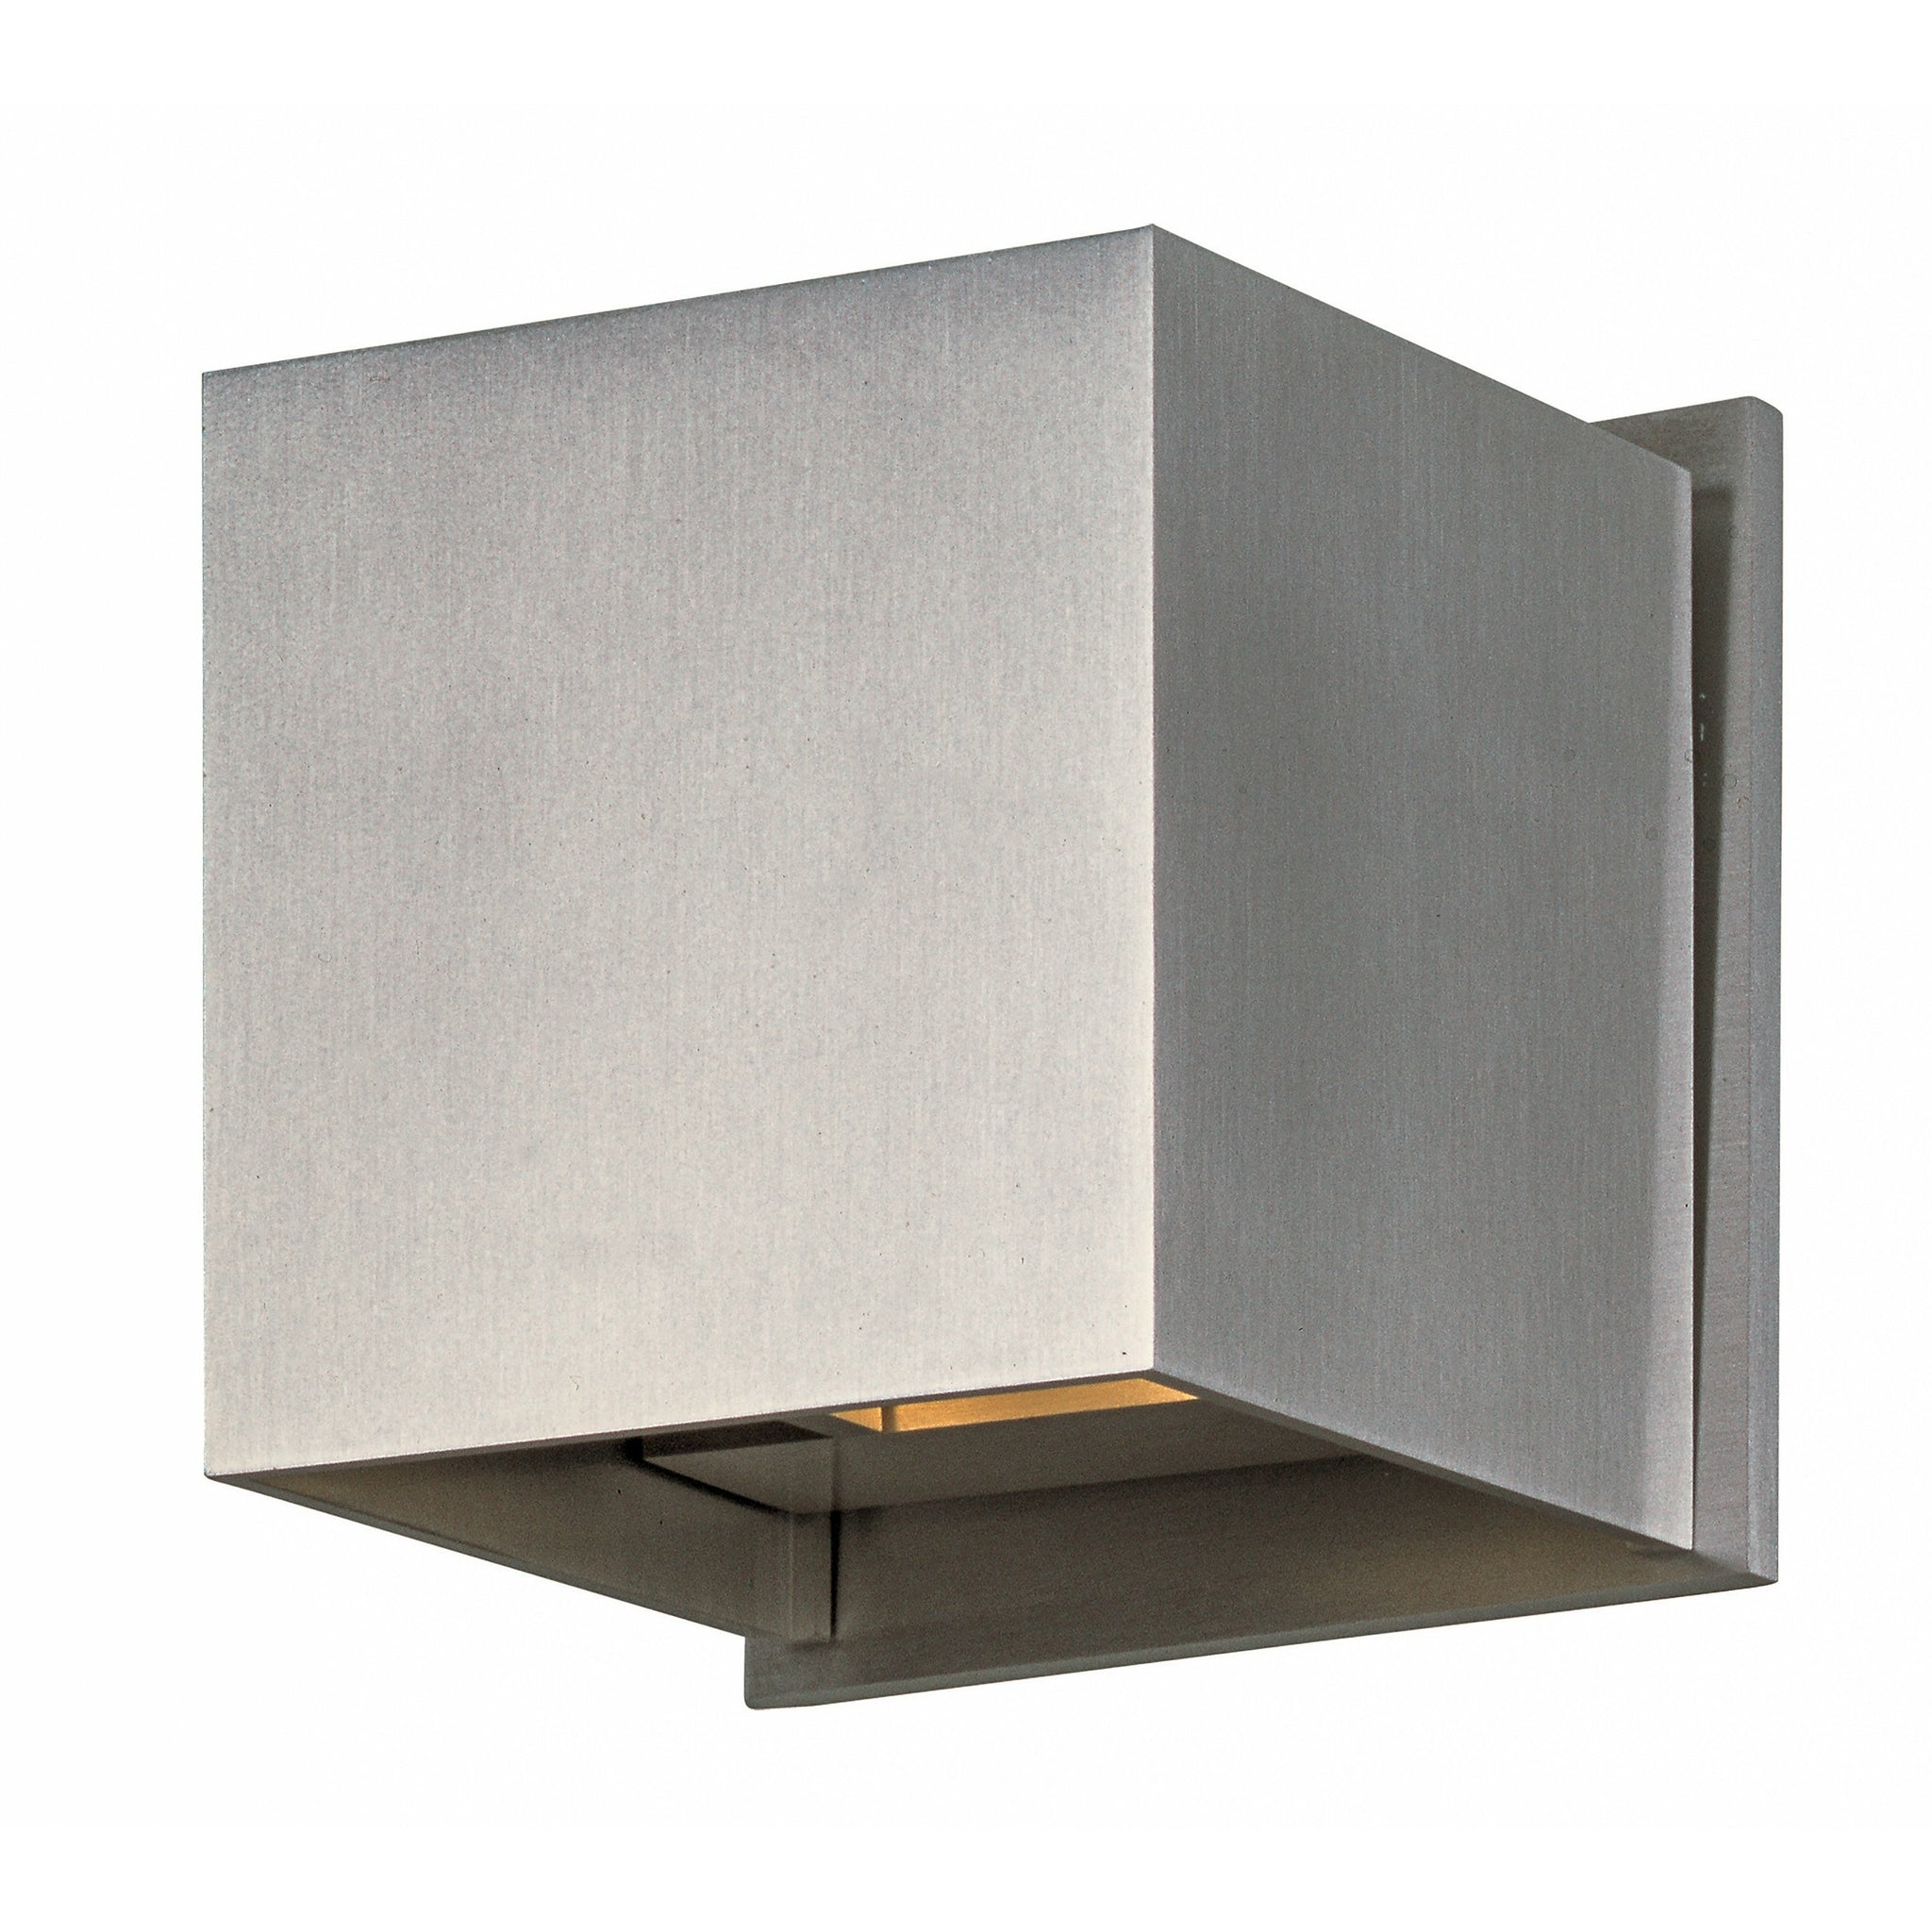 Alumilux Cube Outdoor Wall Light Satin Aluminum